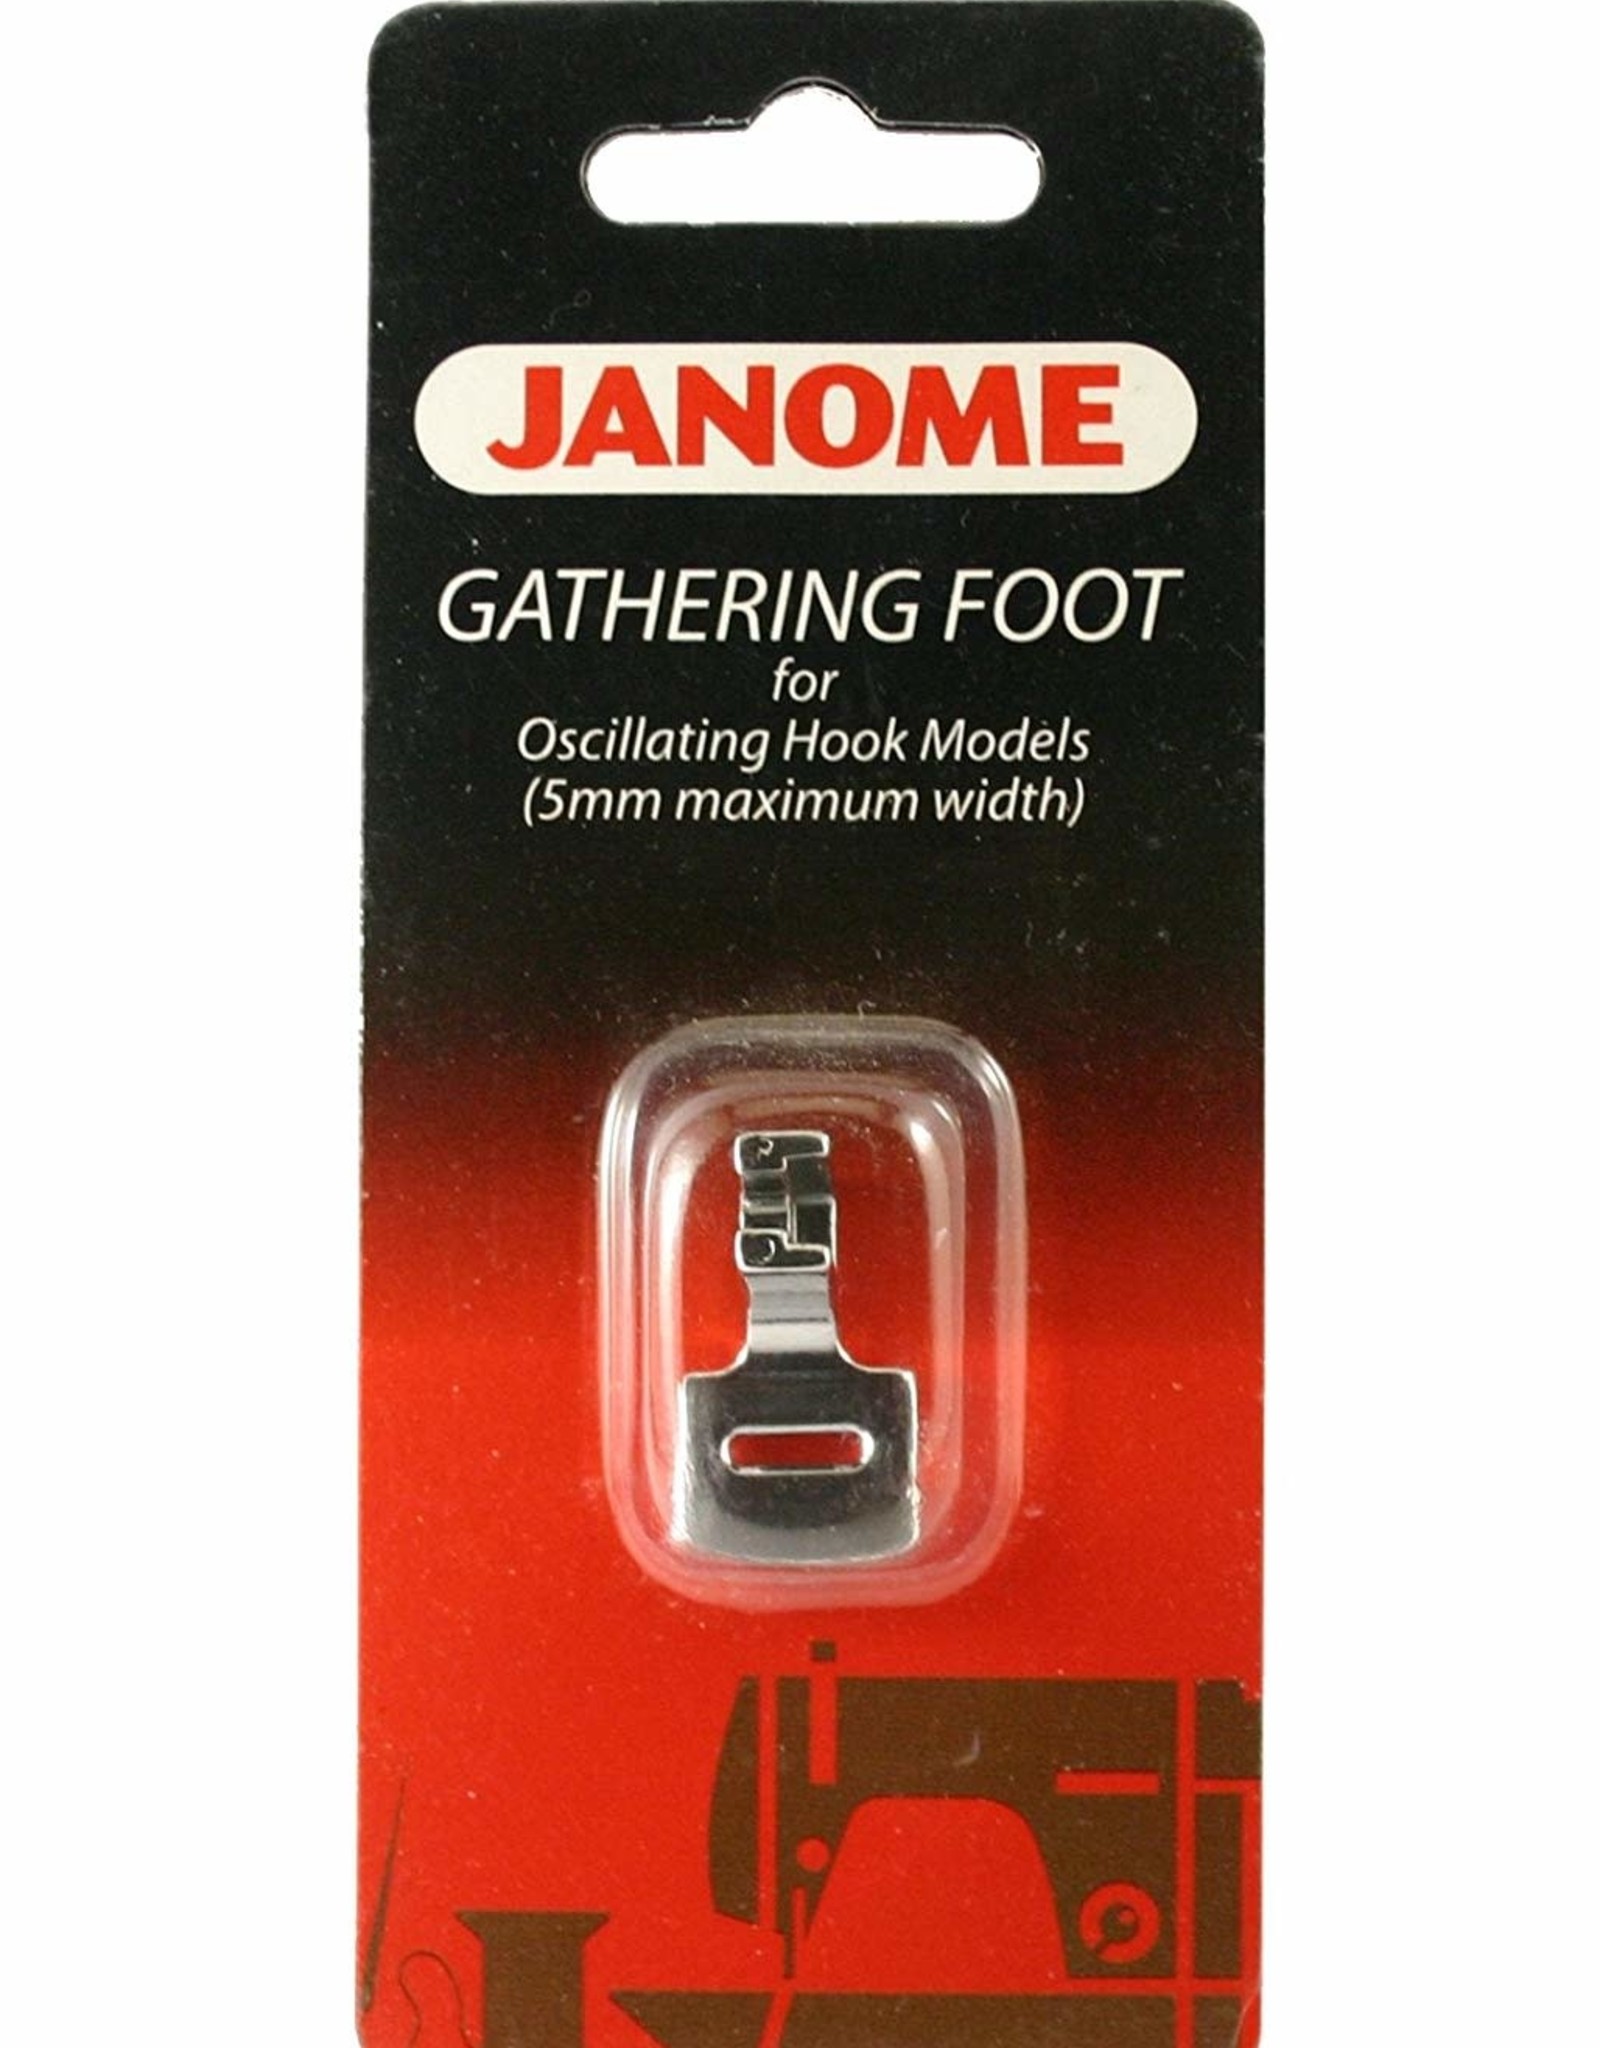 Janome Gathering foot oscillating 5mm - 200124007